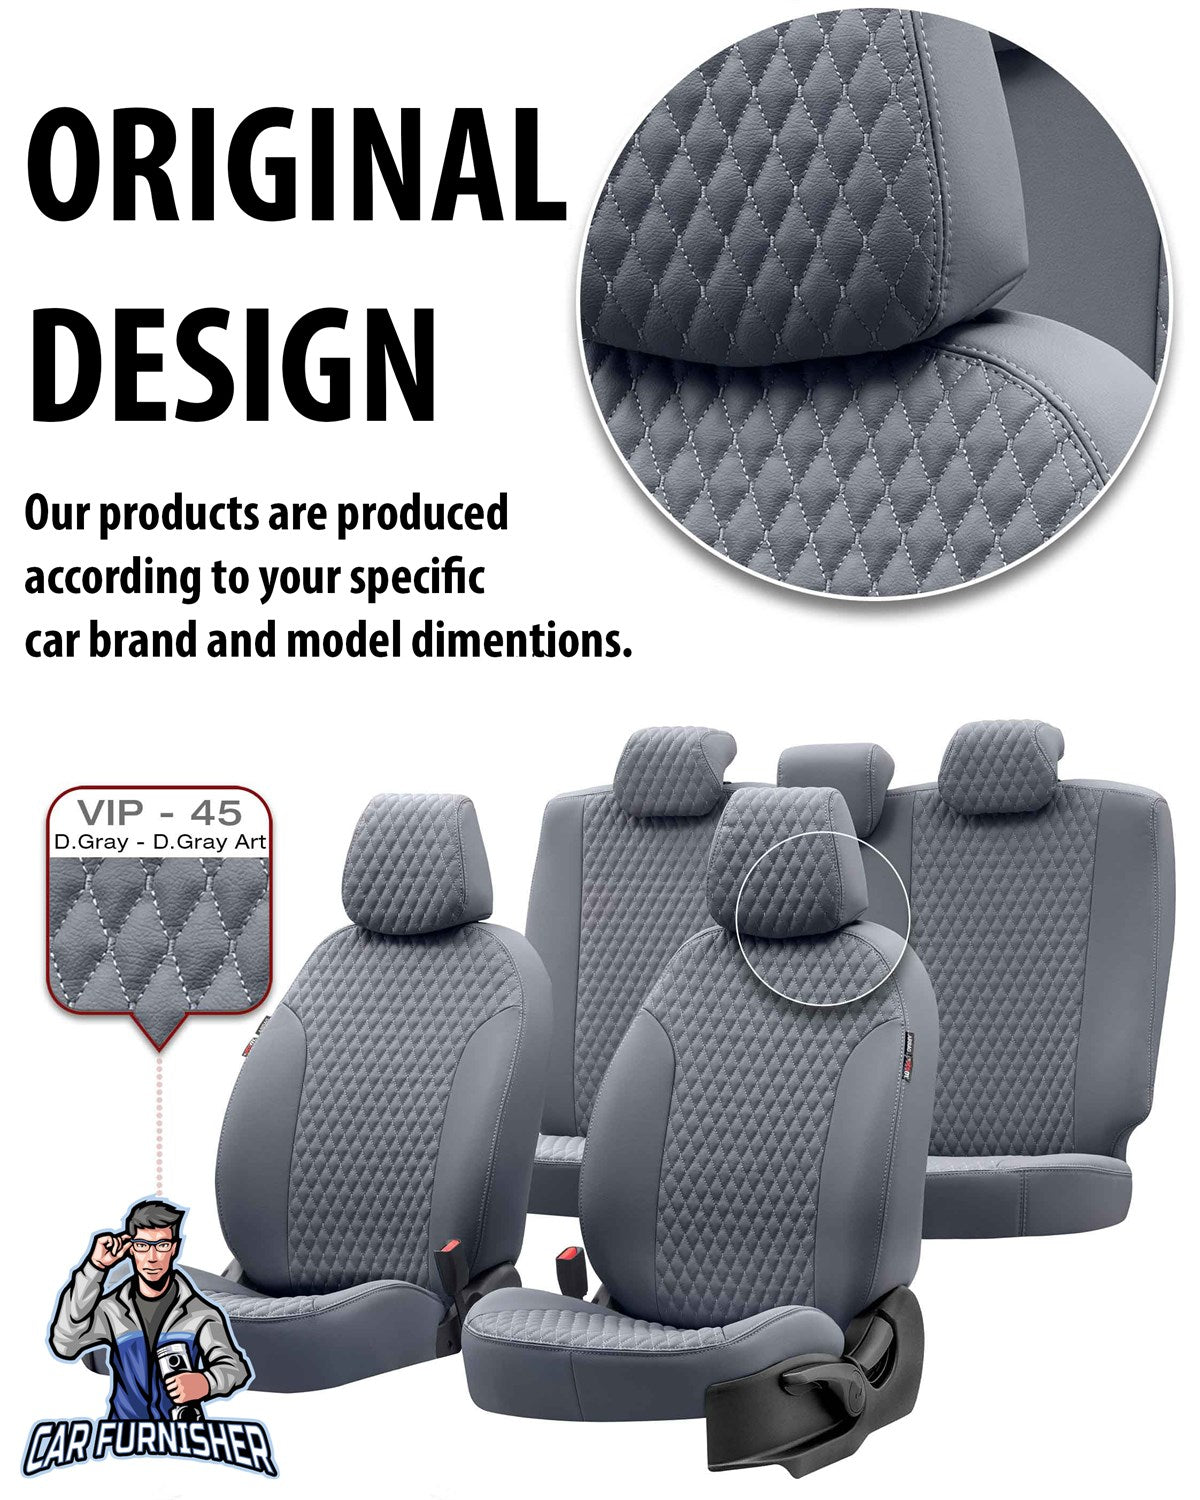 Skoda Scala Seat Covers Amsterdam Leather Design Smoked Black Leather